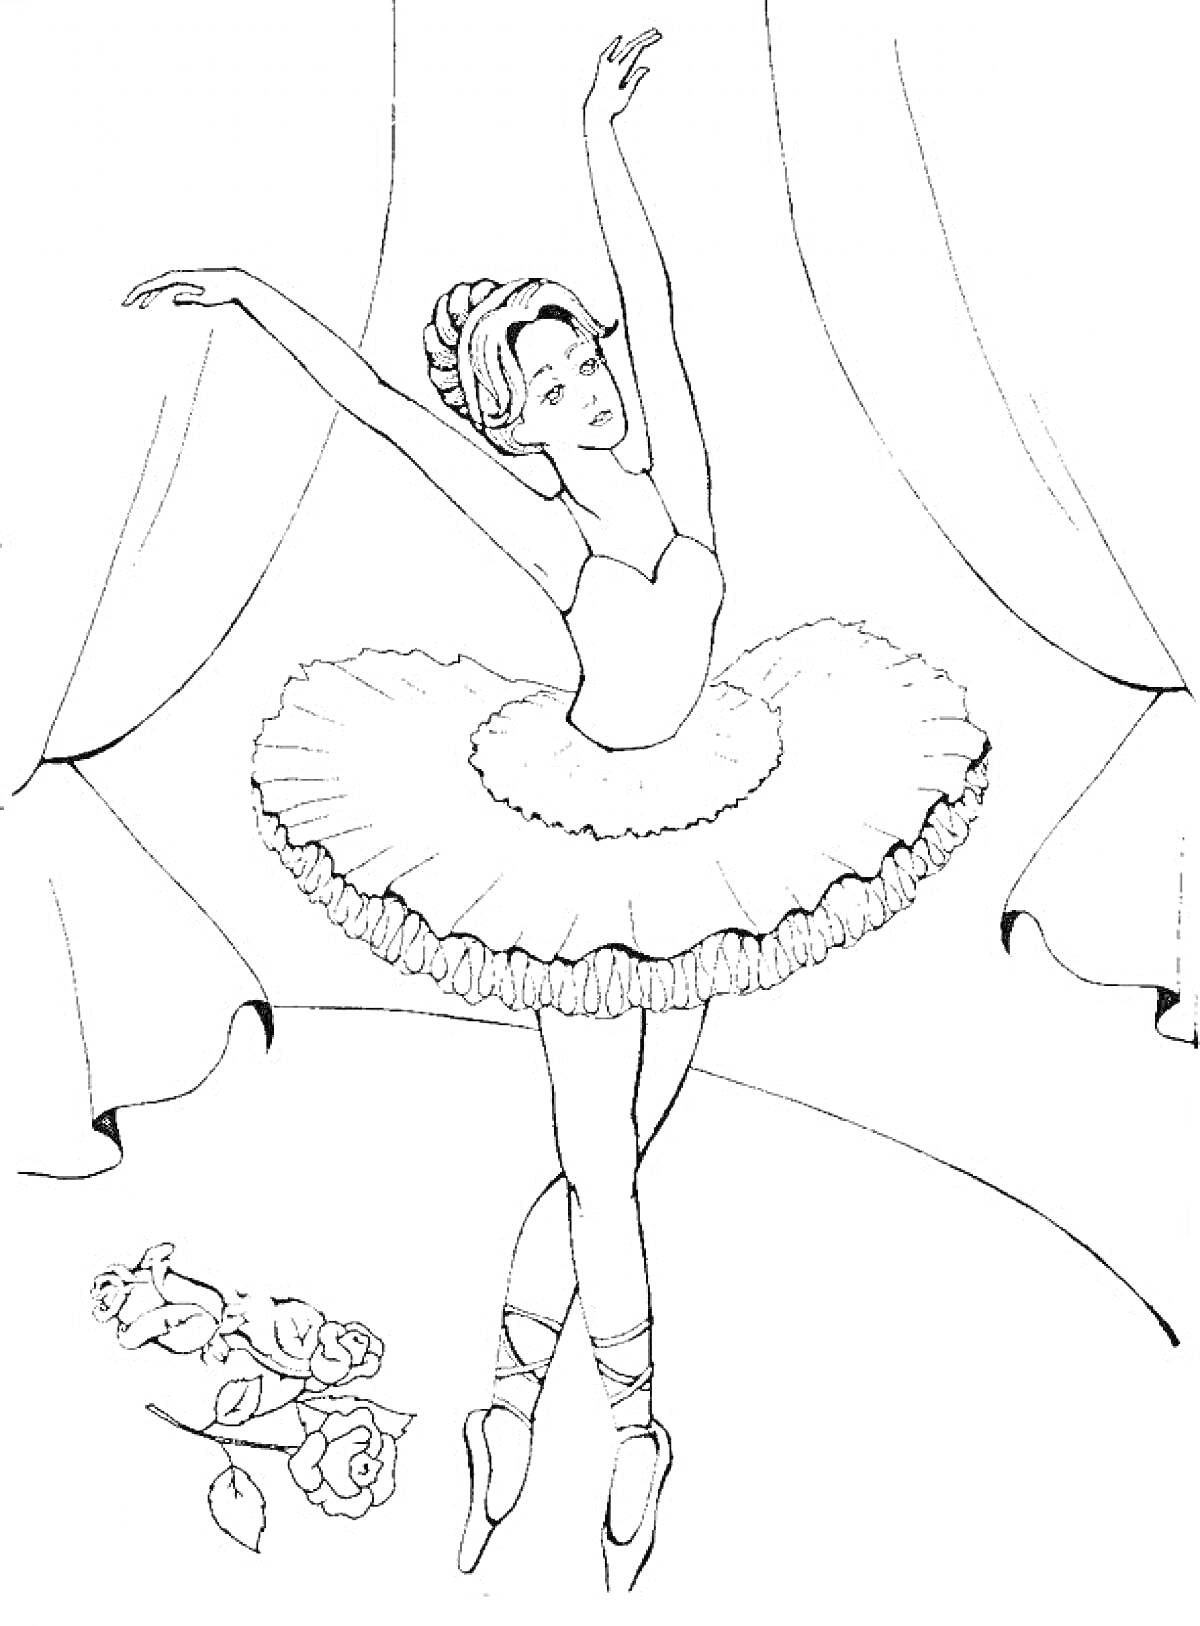 Балерина на сцене с занавесом и розами